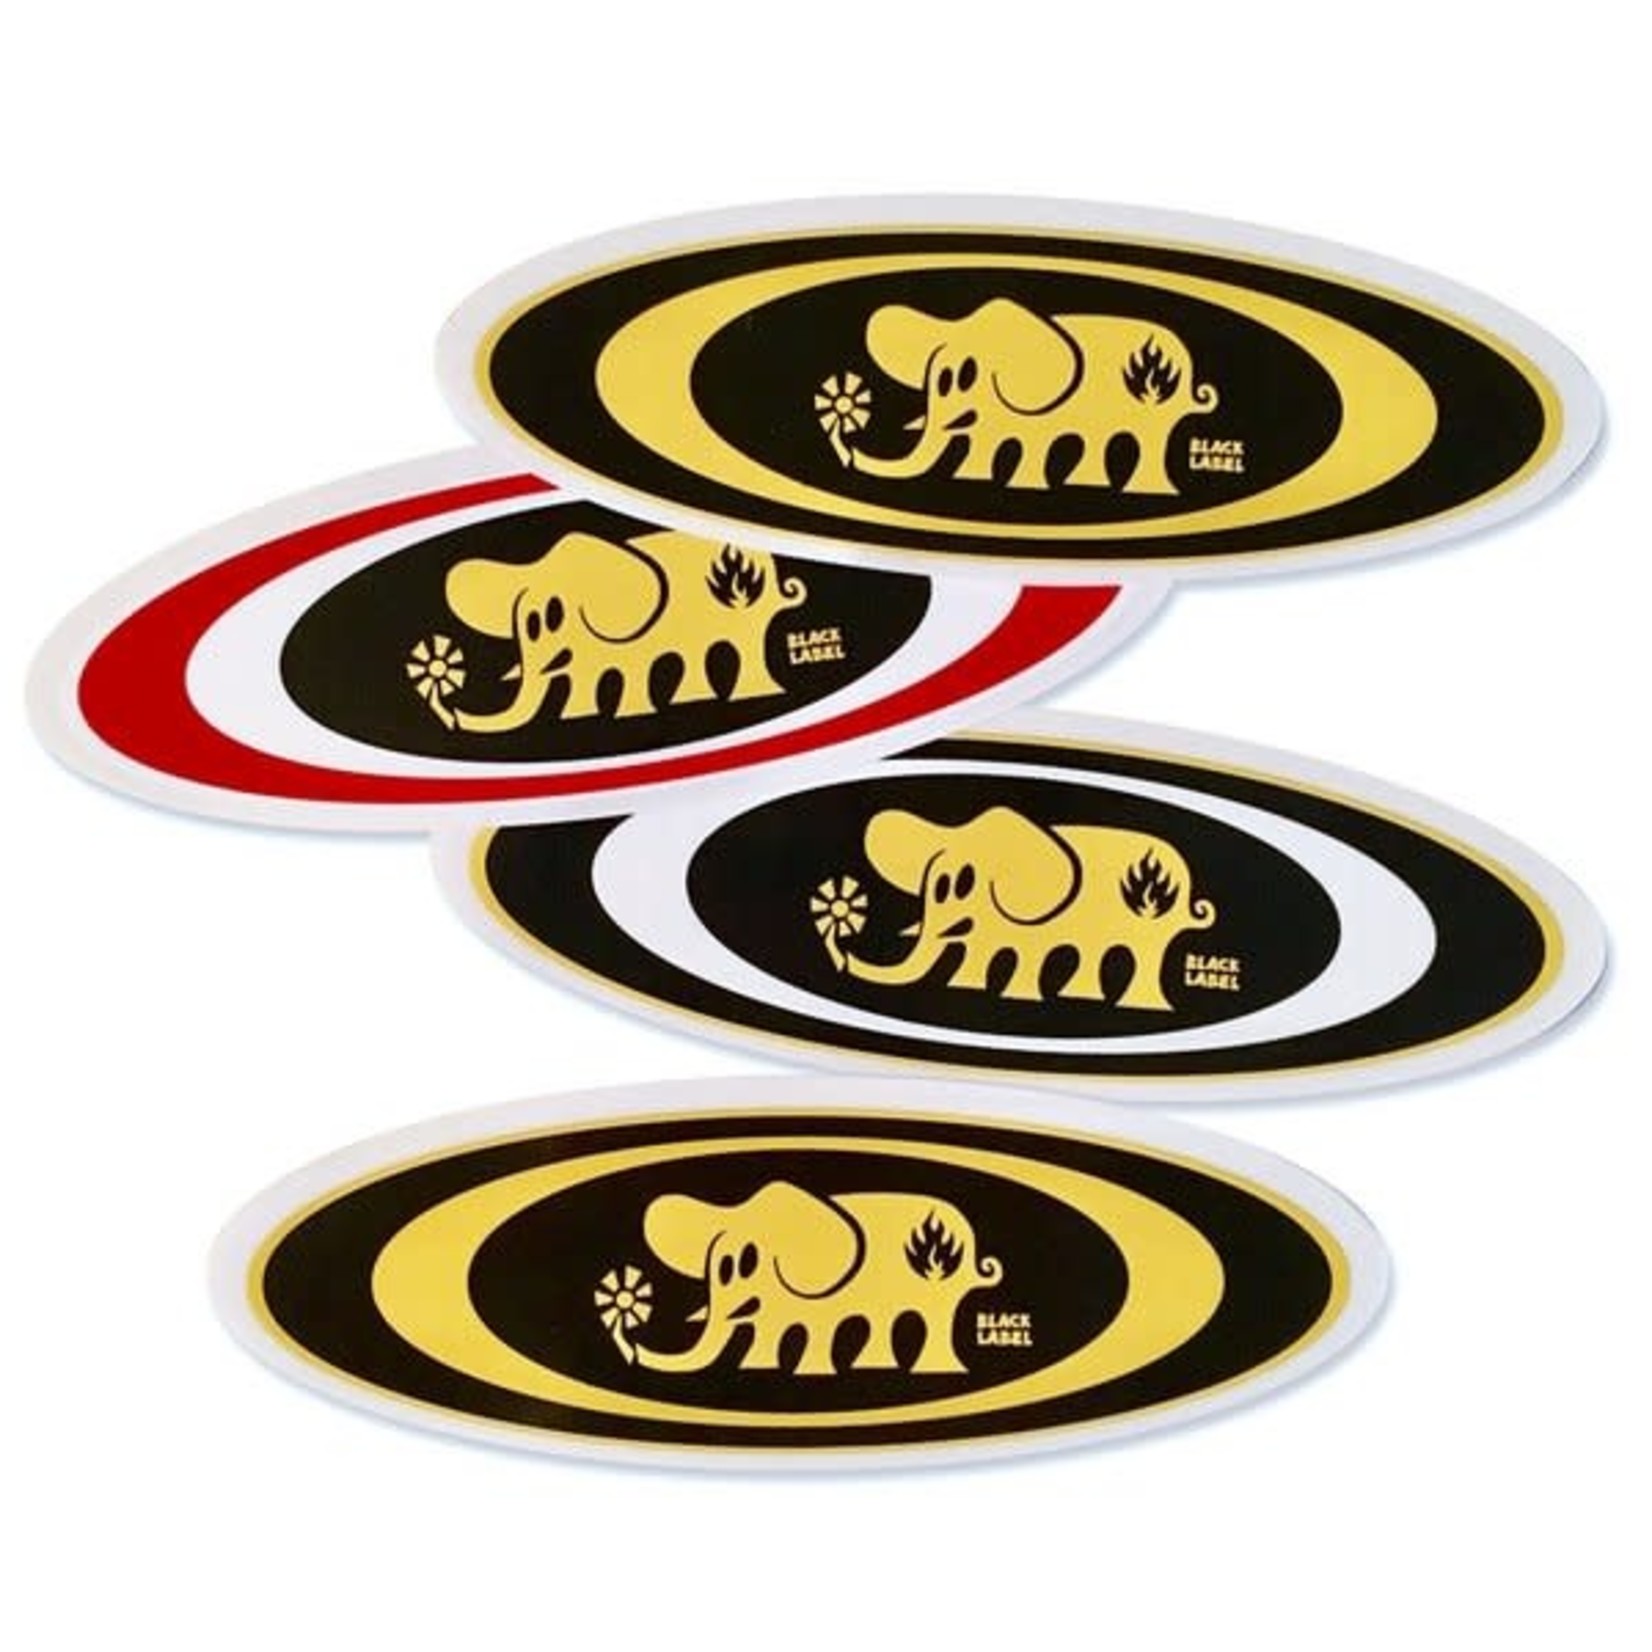 Black Label Black Label Sticker - Oval Elephant - colors vary